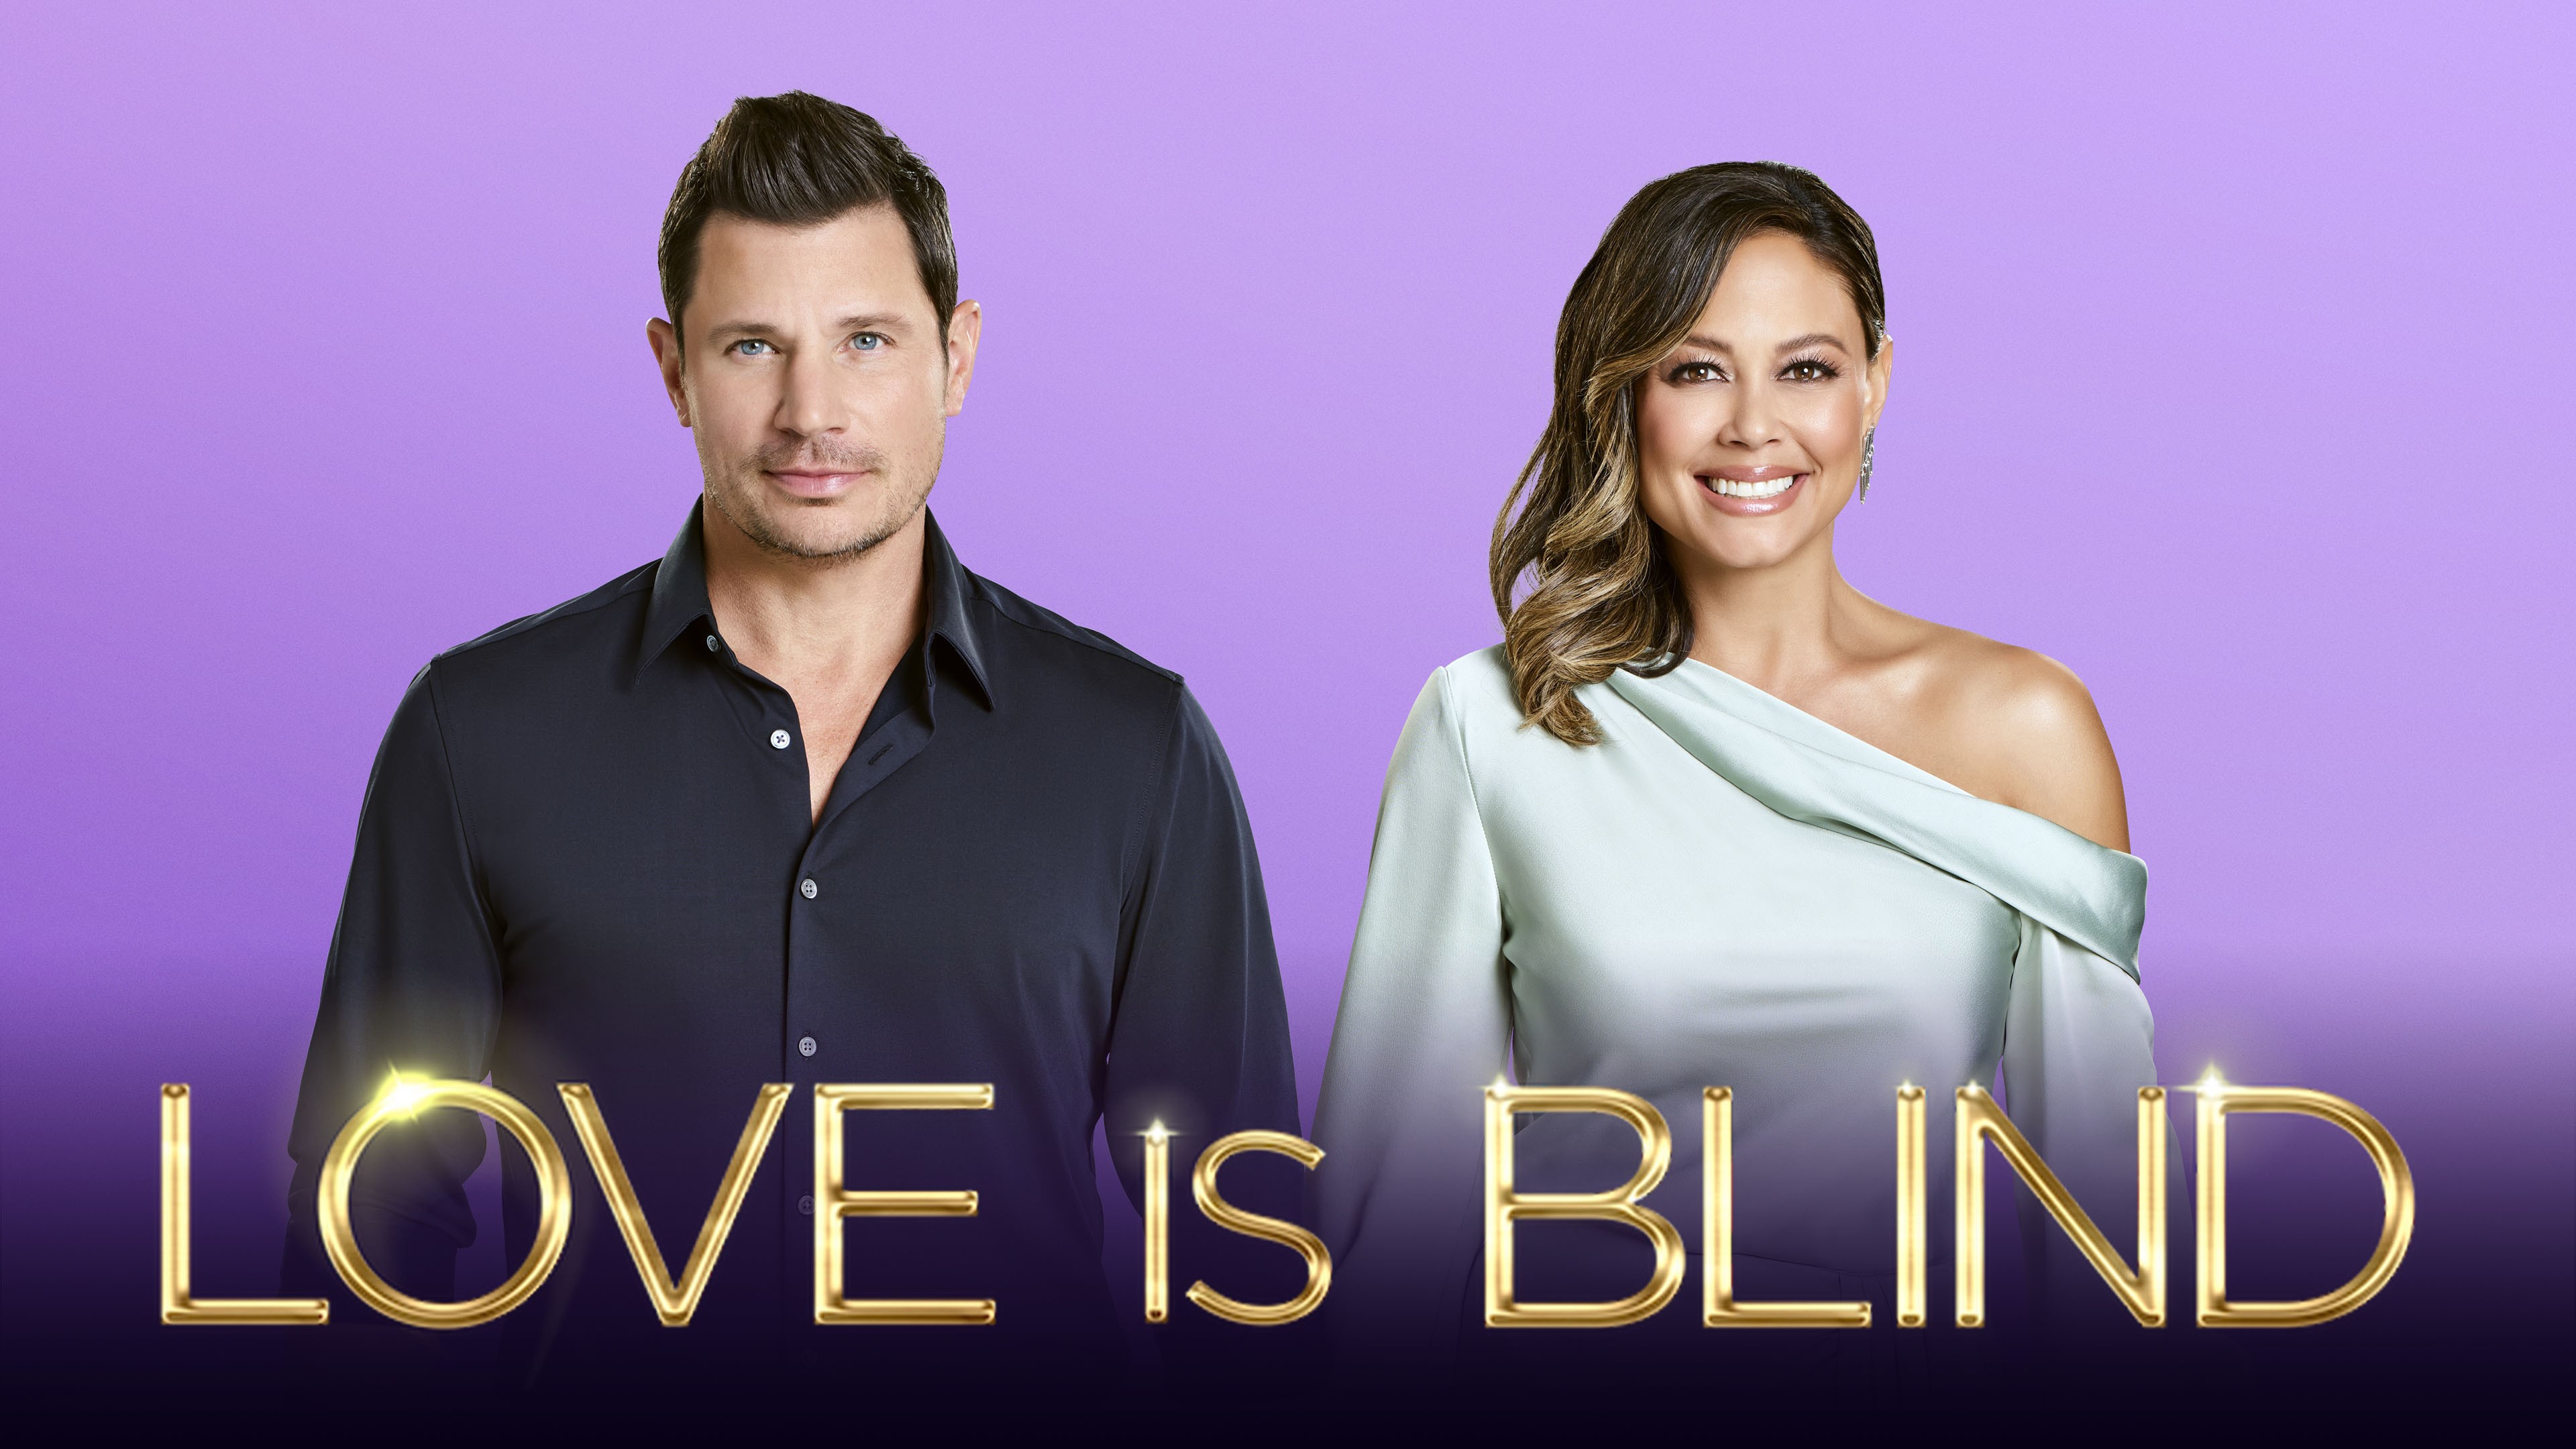 Love Is Blind (TV series) - Wikipedia